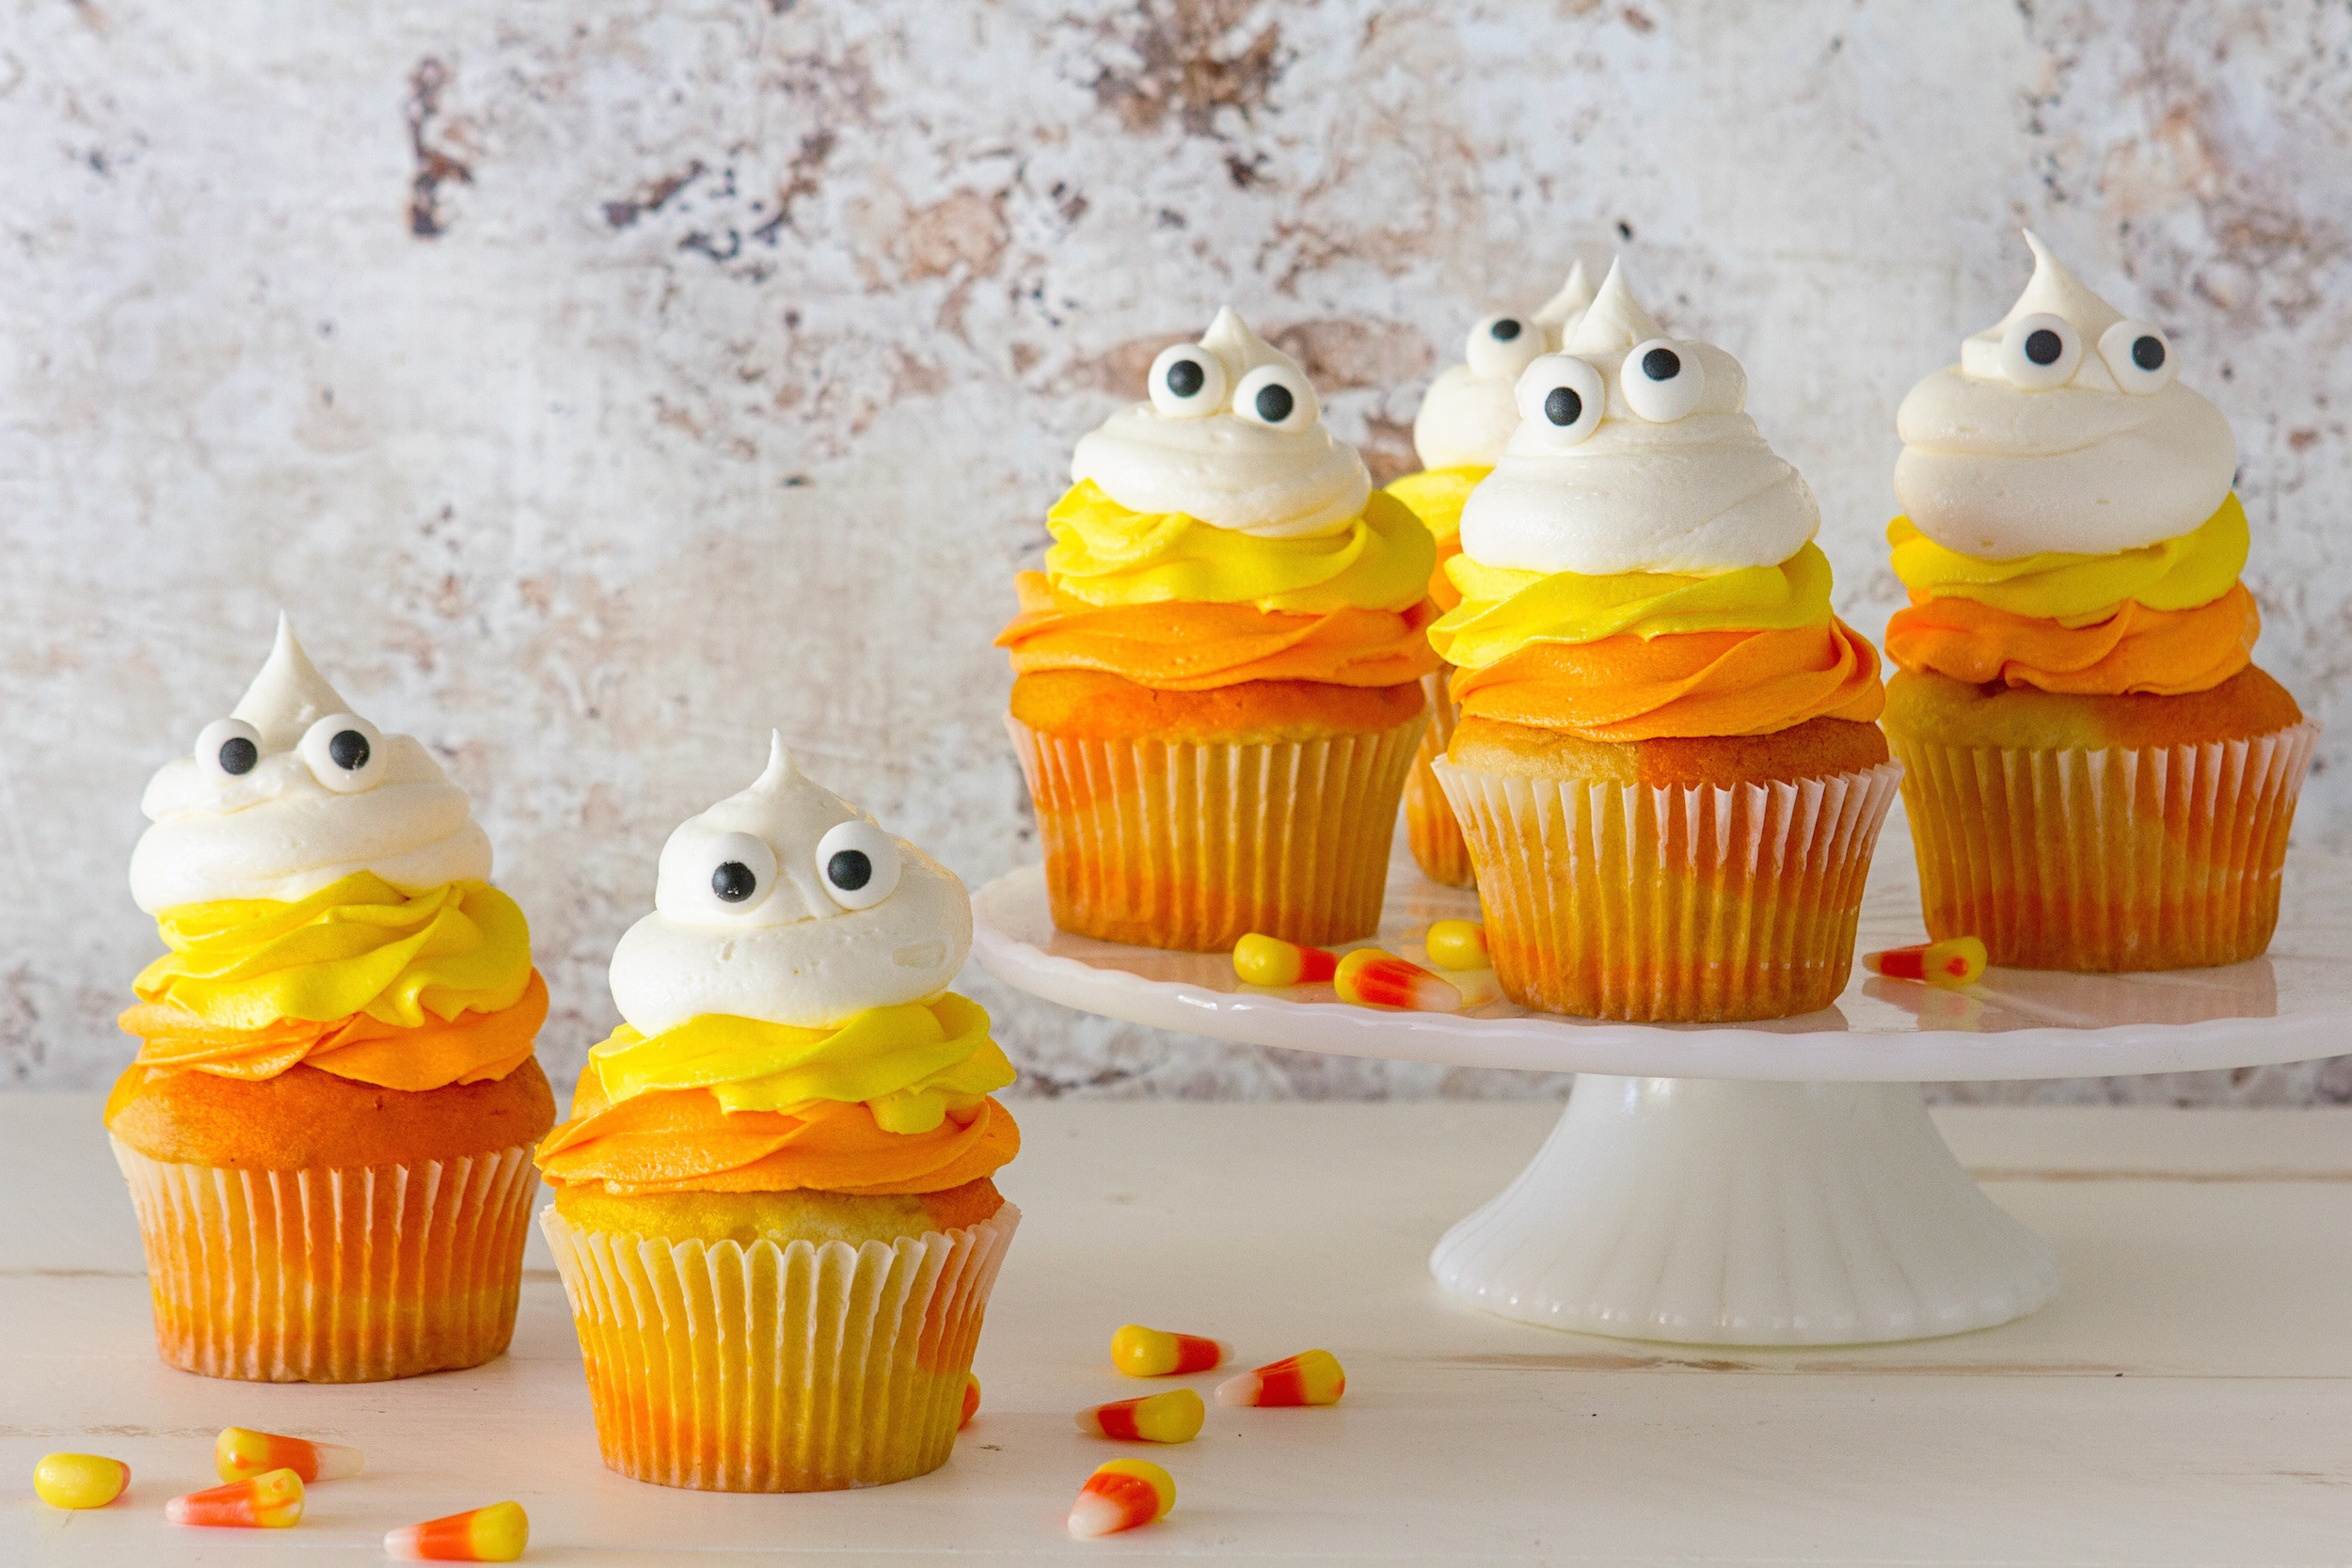 Halloween Cupcakes Decorating Ideas
 18 Easy Halloween Cupcake Ideas Recipes & Decorating